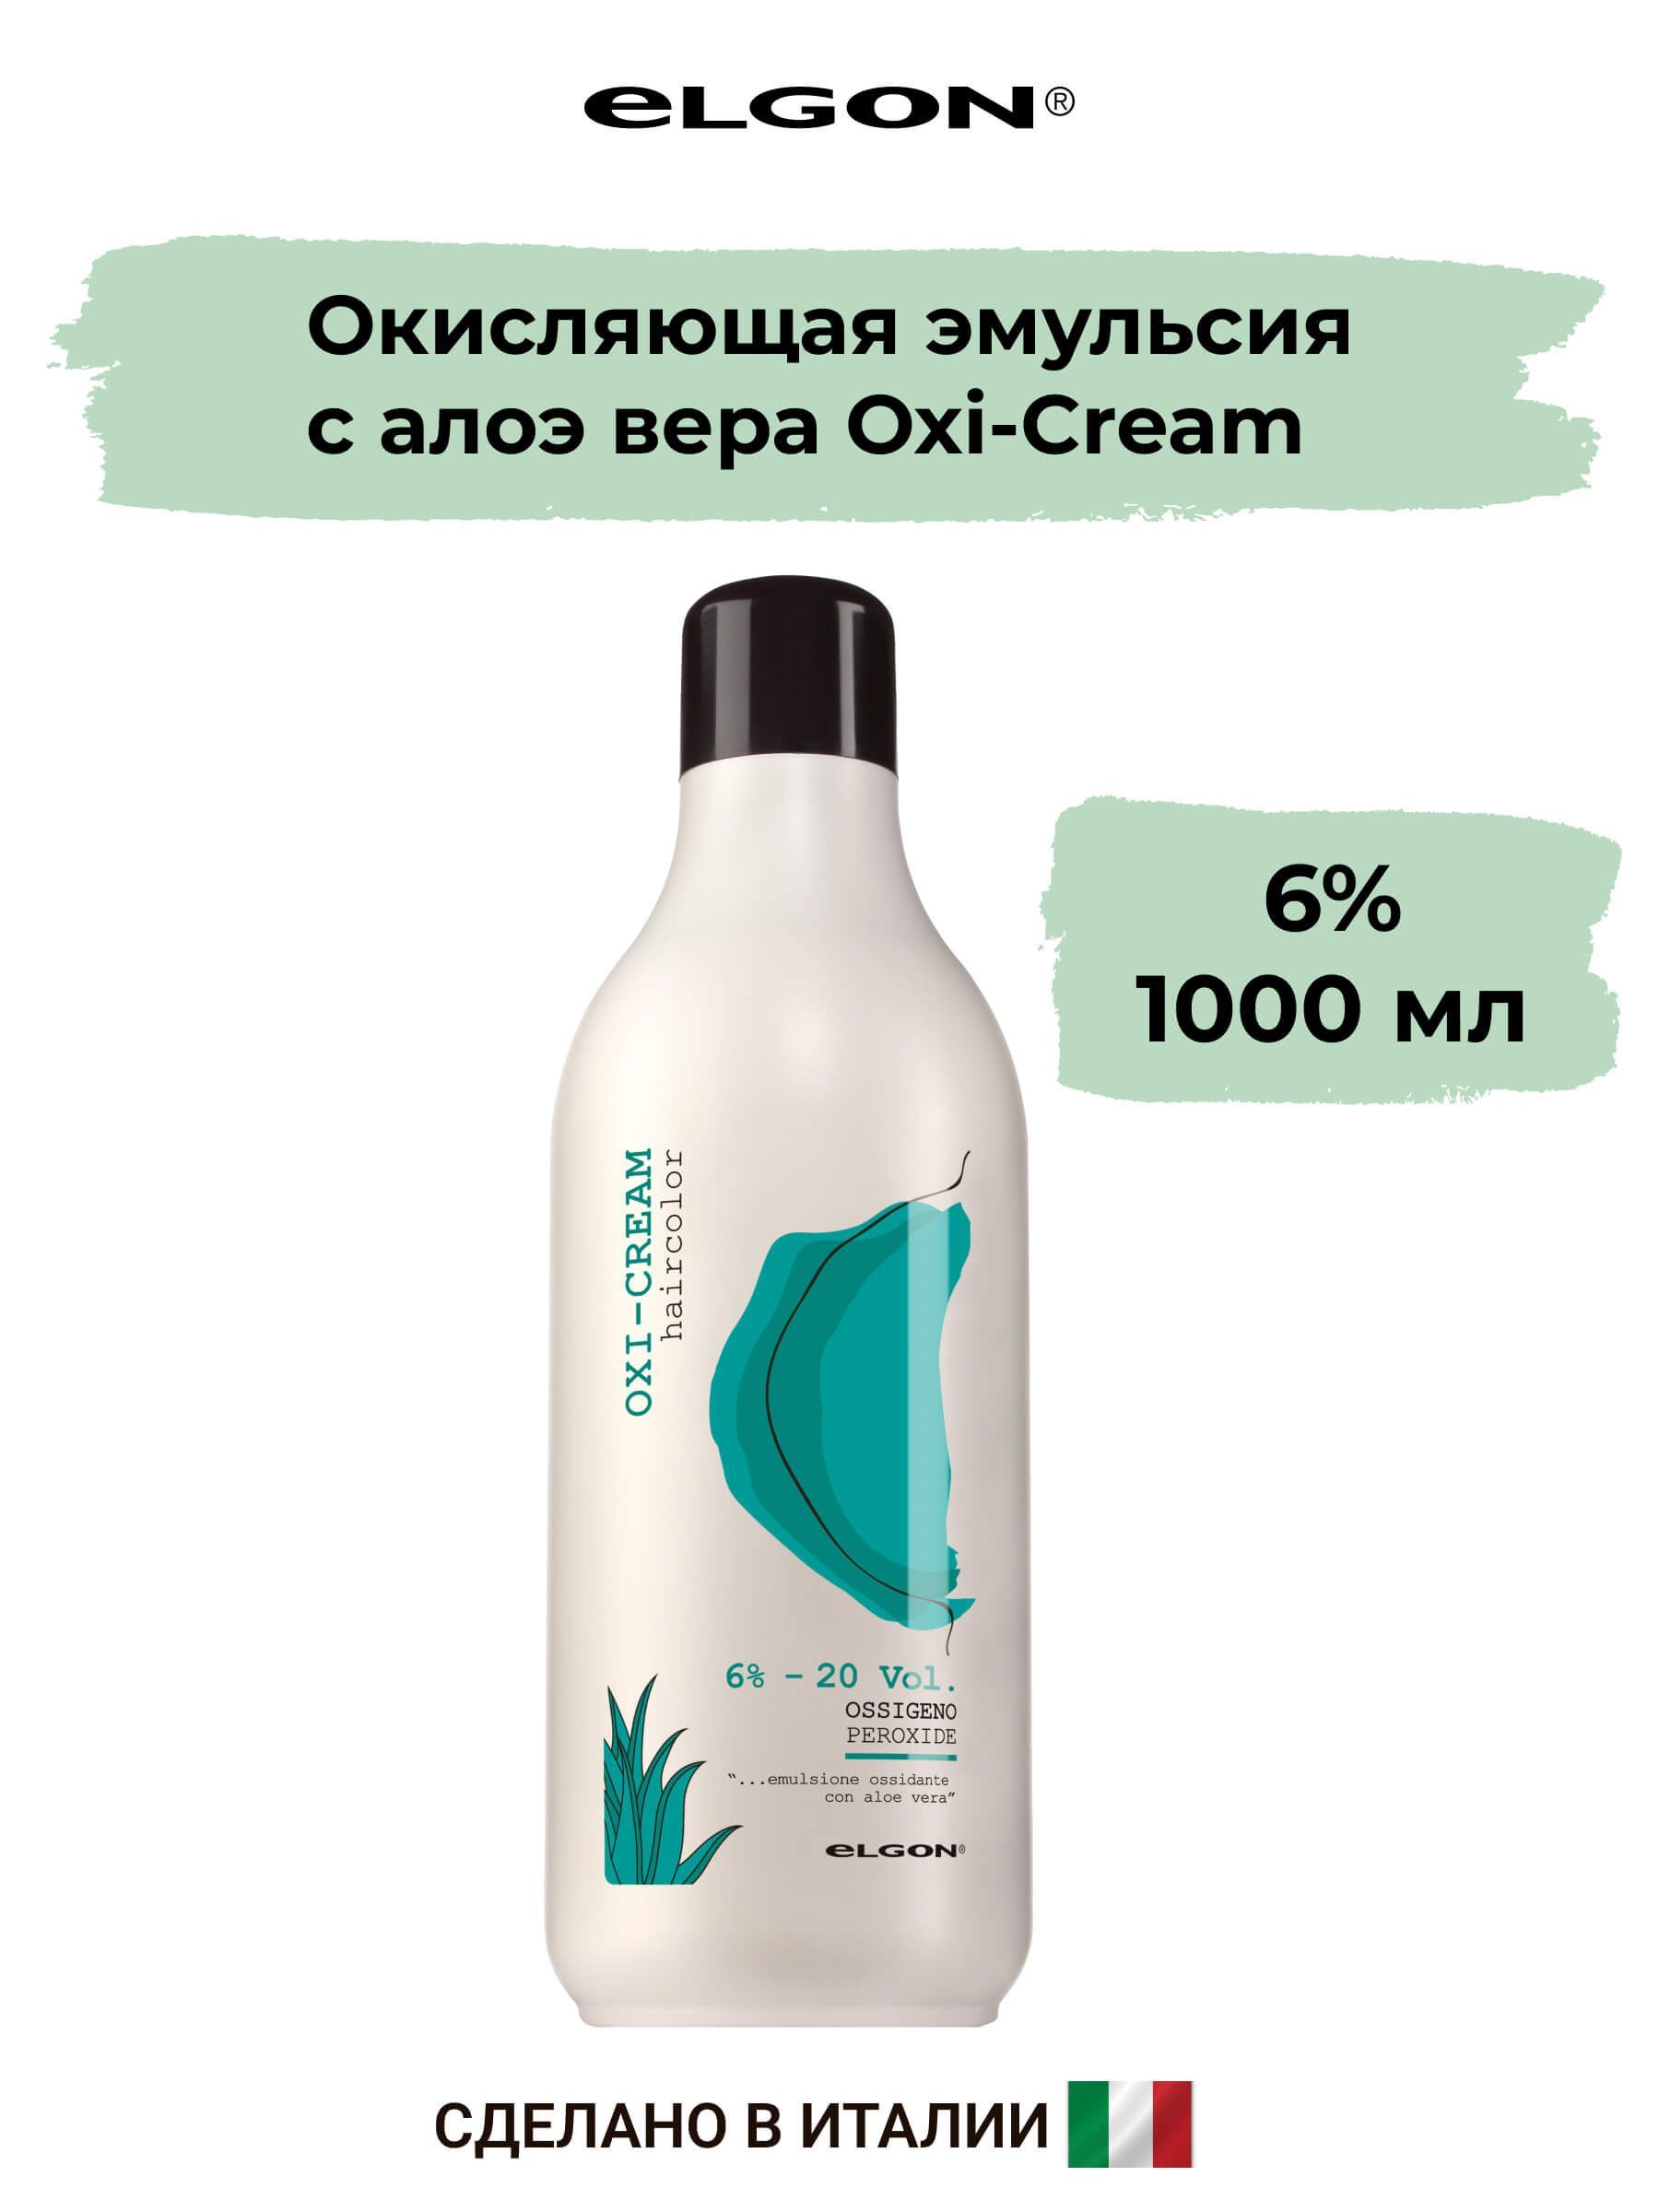 ElgonОкисляющаяэмульсиясалоэвераOxi-Cream6%,1000мл.